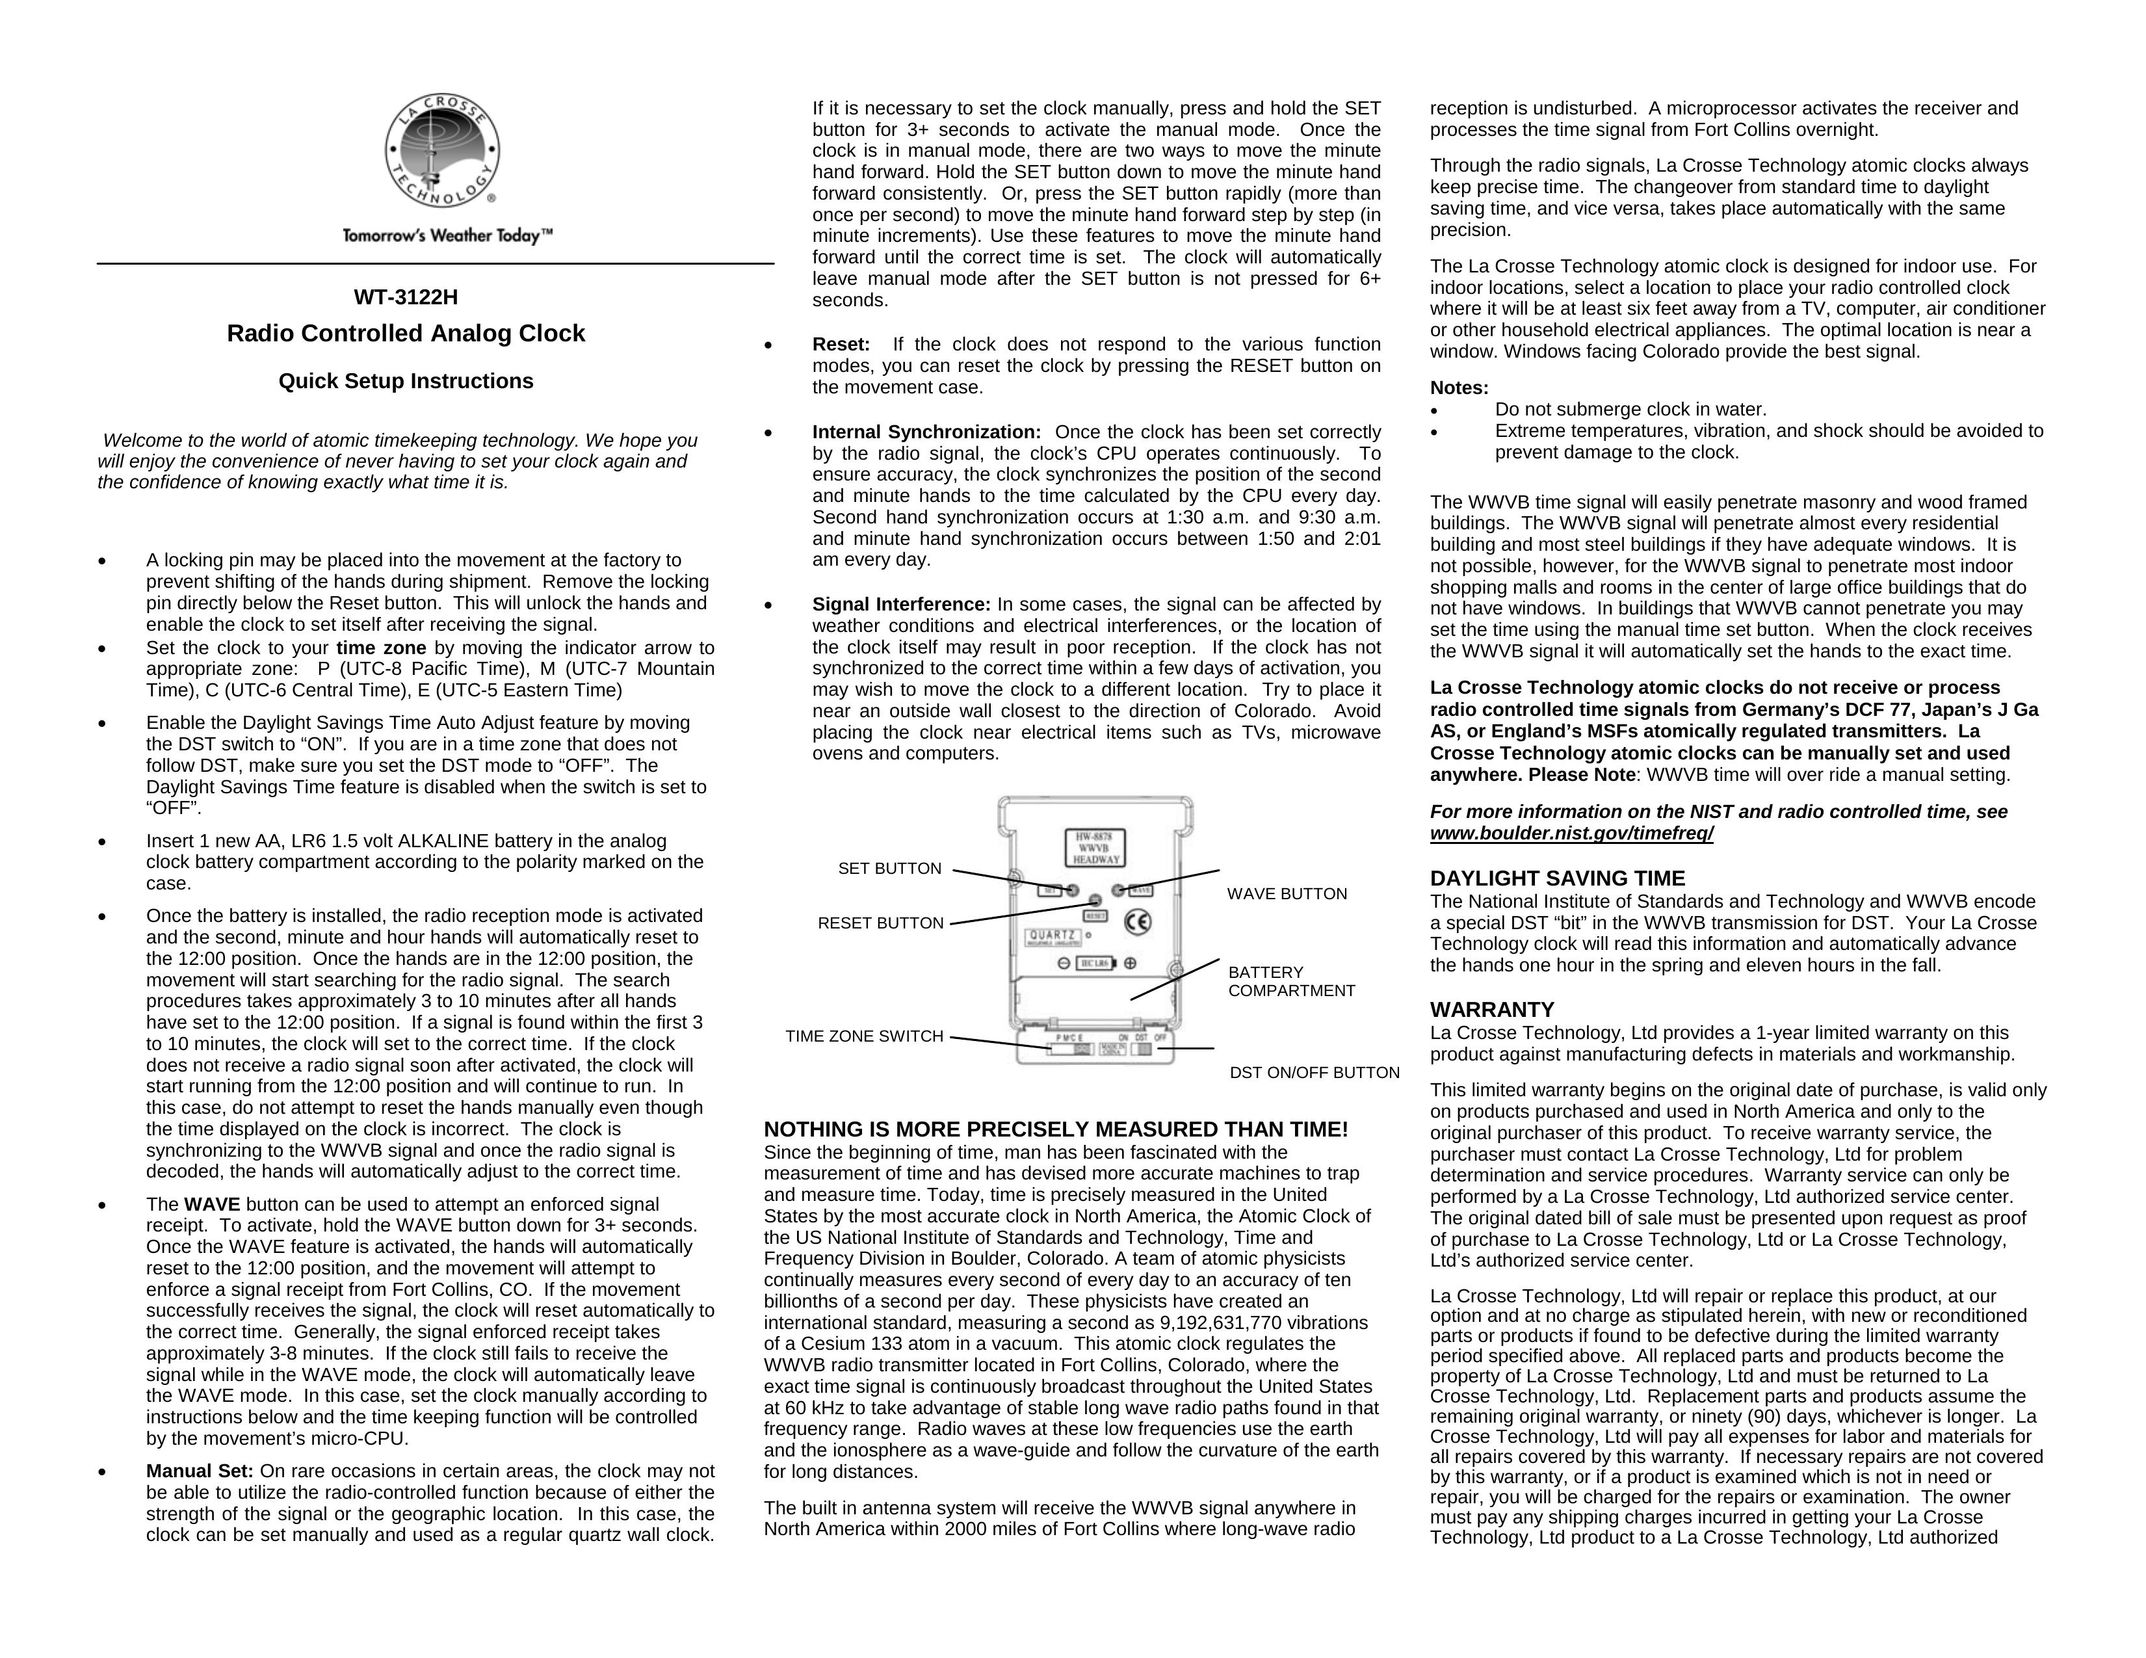 La Crosse Technology WT-3122H Clock User Manual